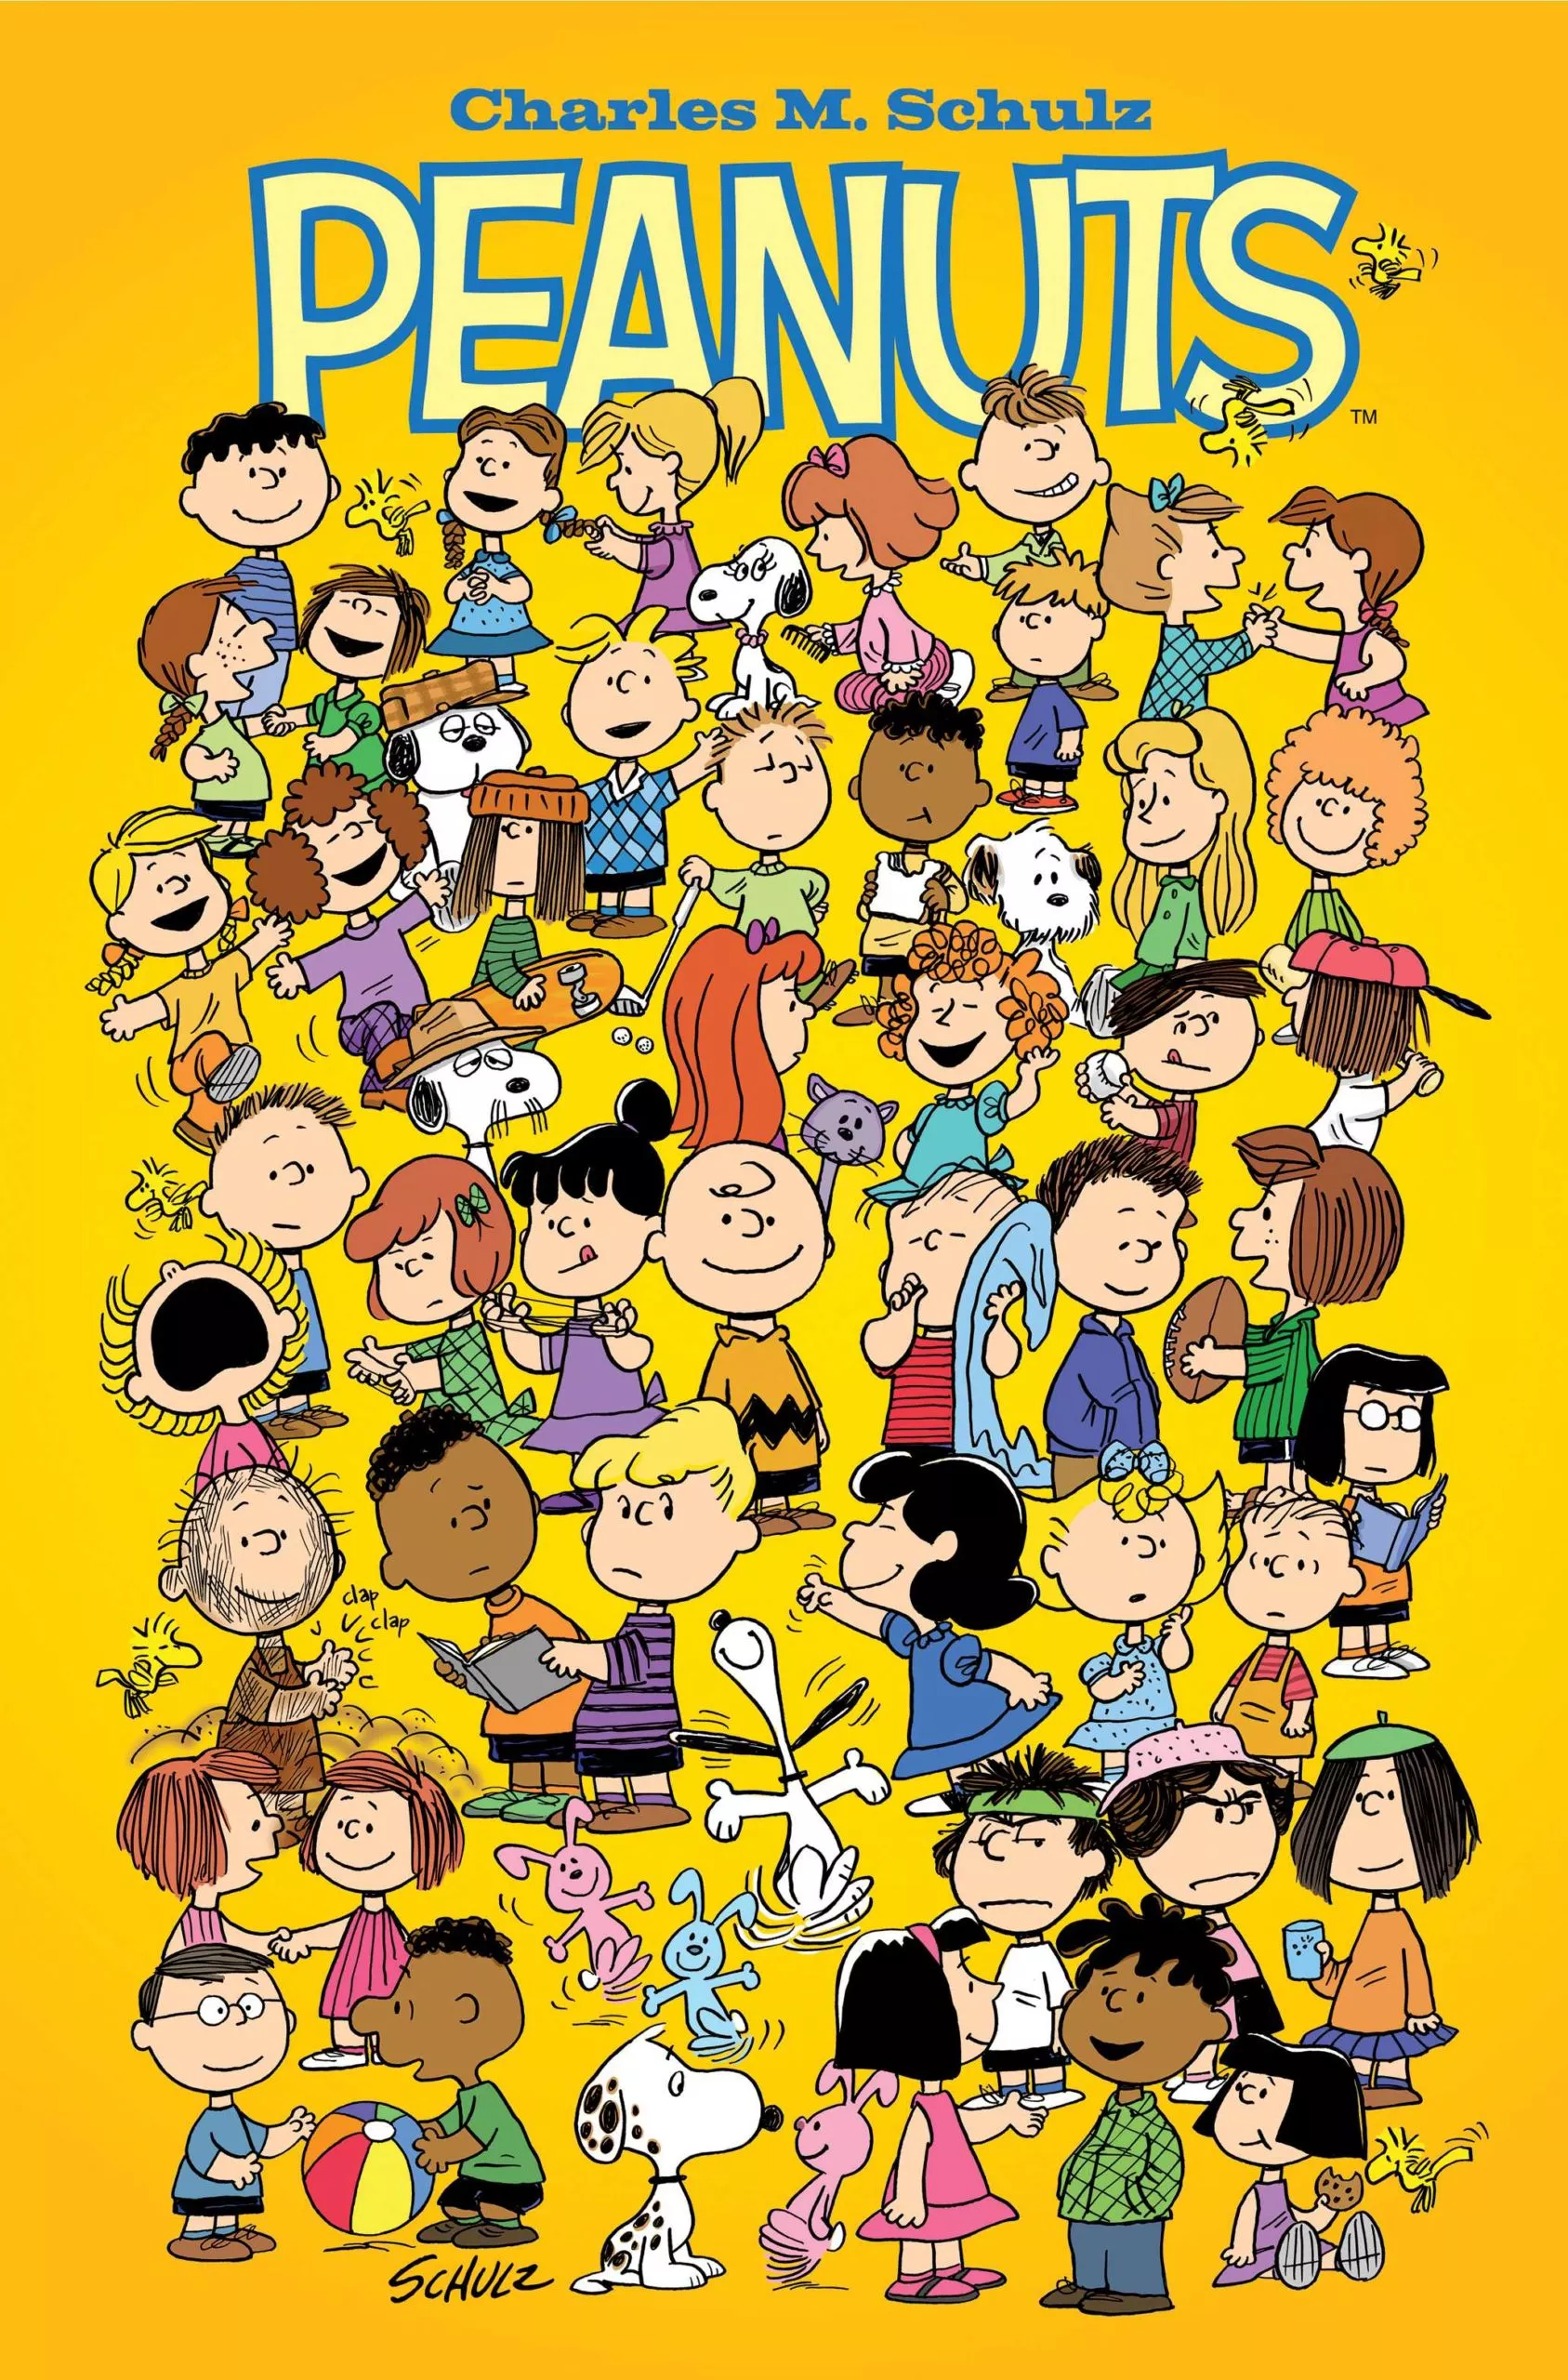 Peanuts - Charles M. Schulz: A Legendary Cartoonist